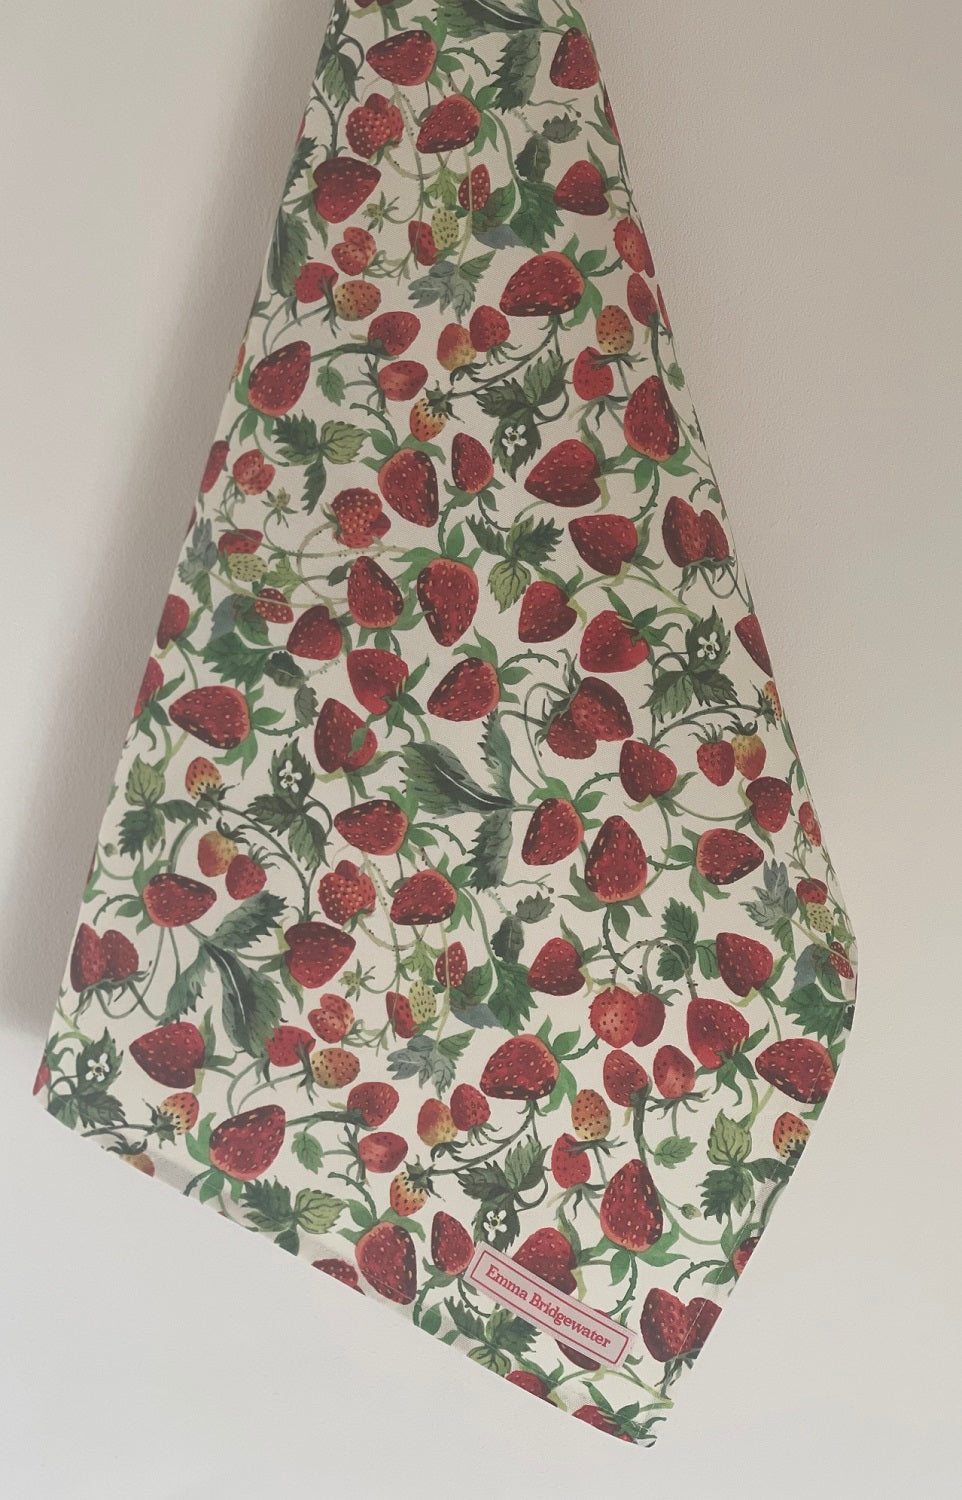 Emma Bridgewater "Strawberries", Pure cotton tea towel.